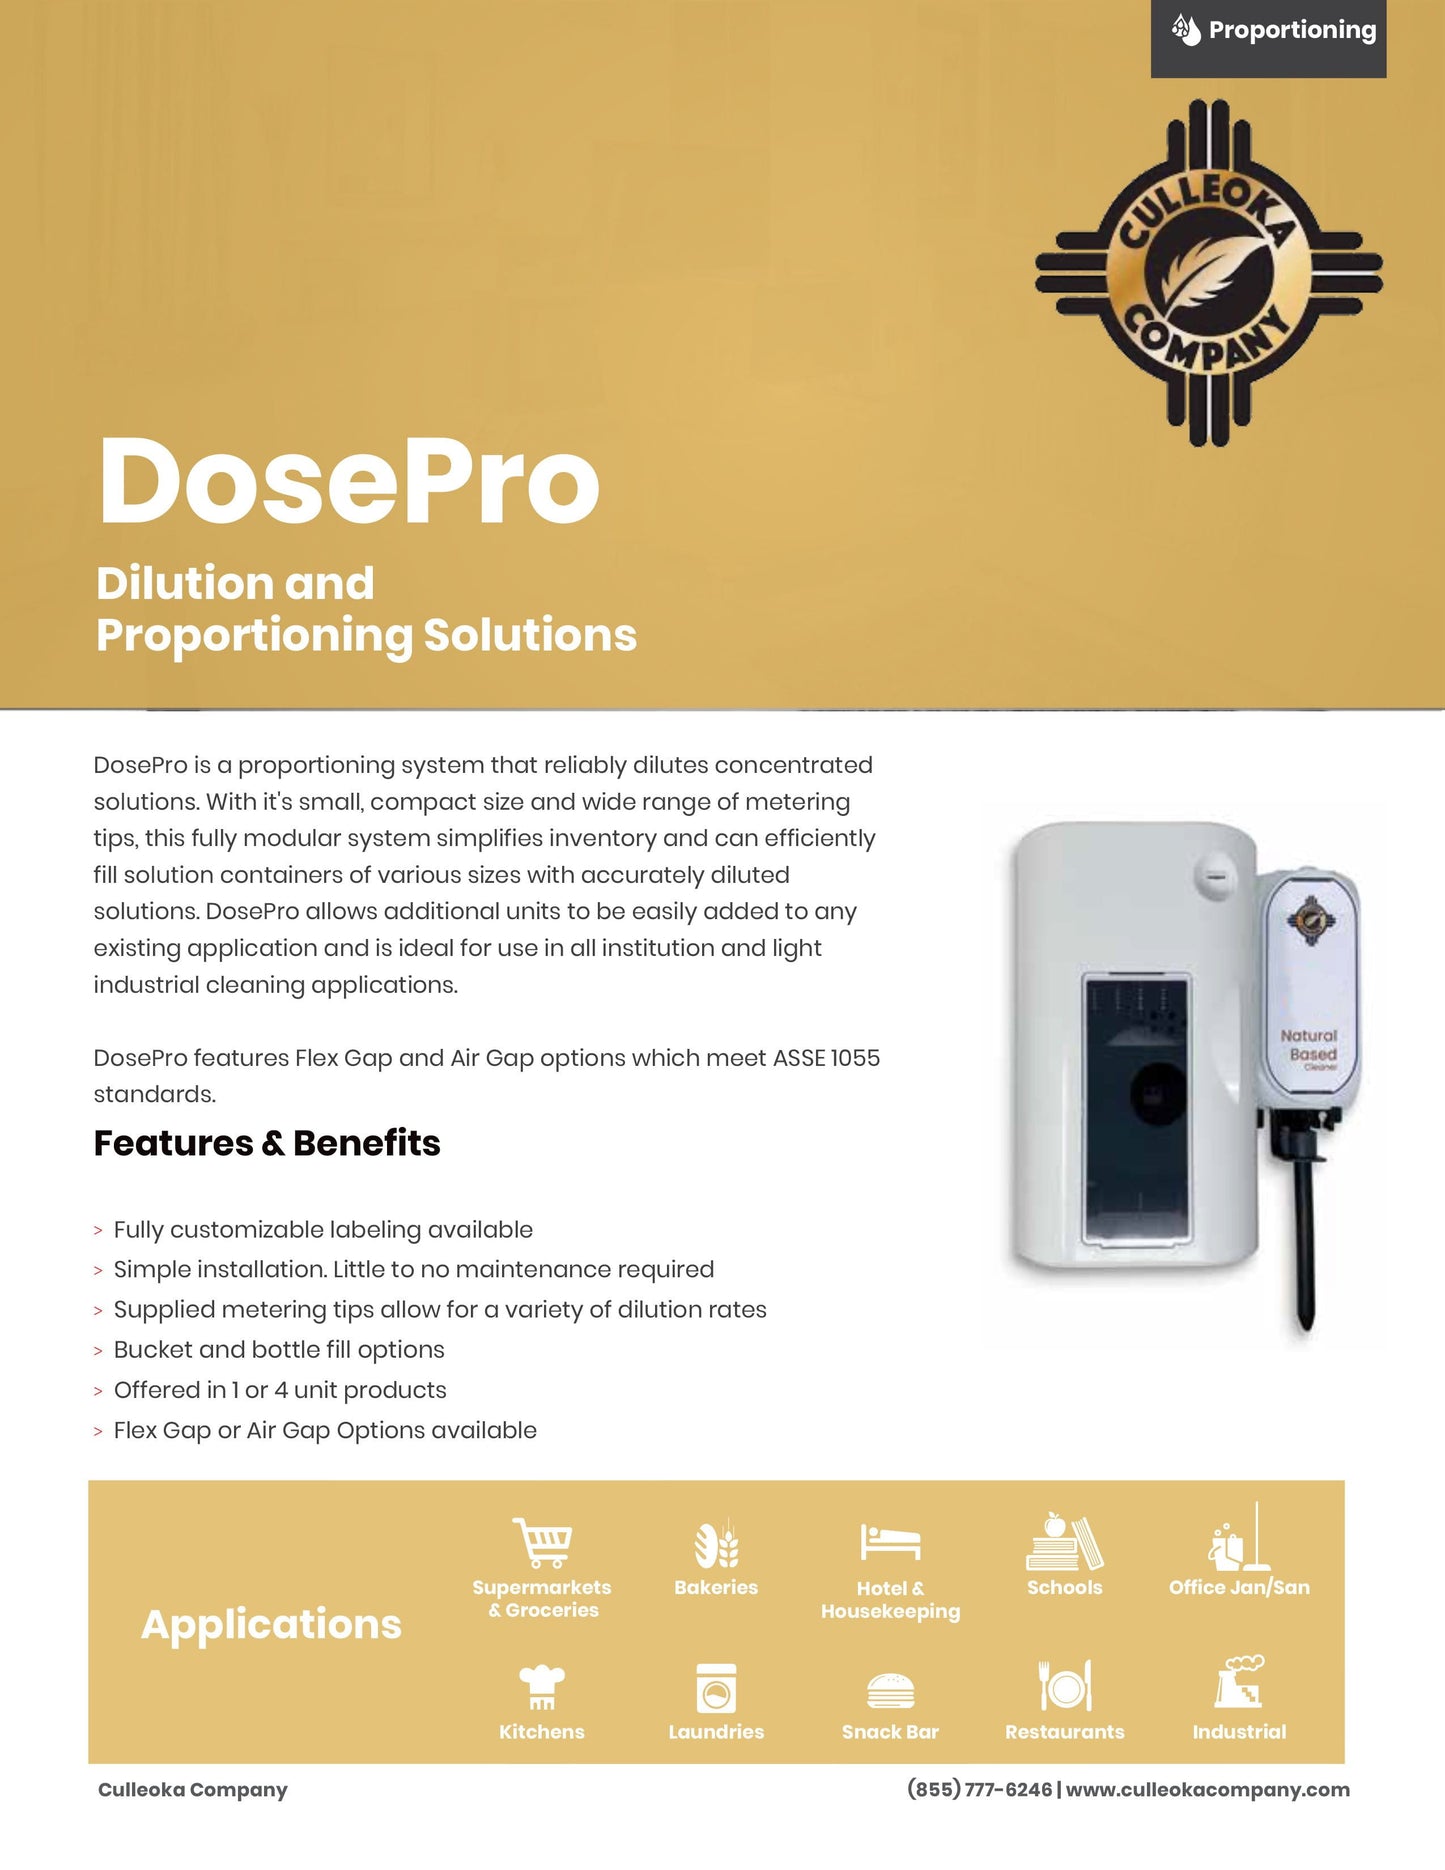 Dose Pro (Business) - Culleoka Company LLC